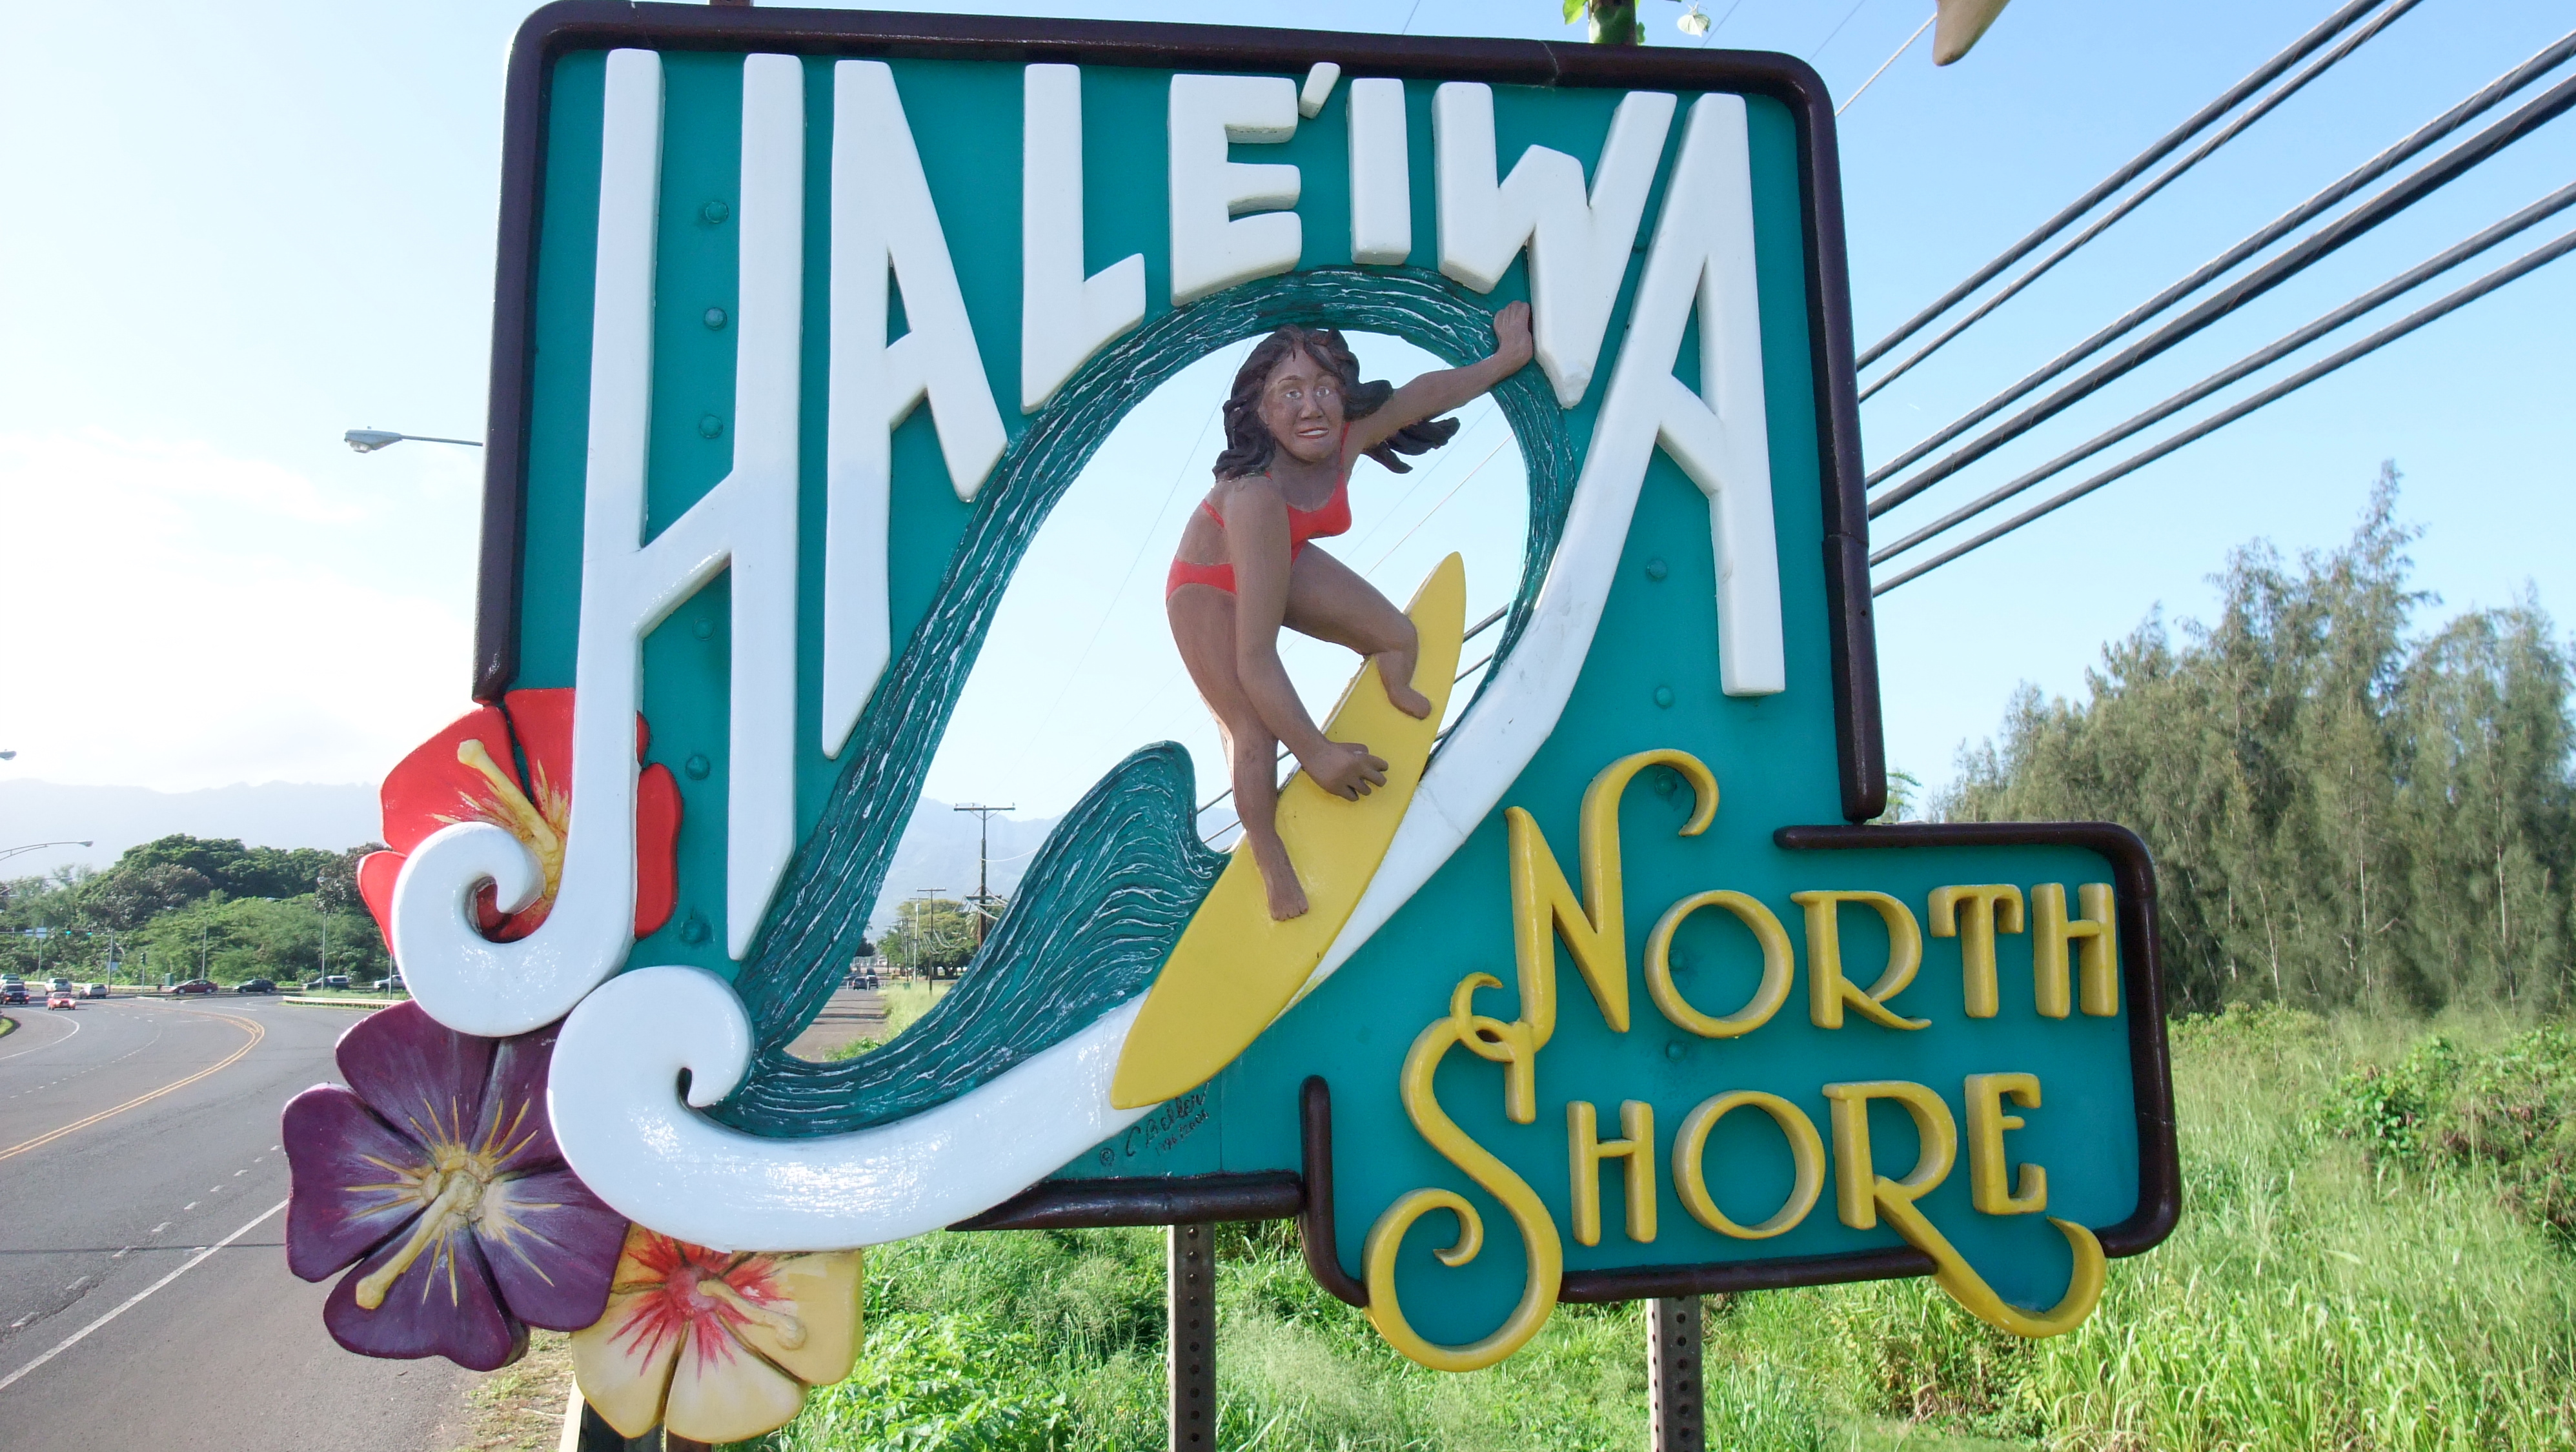 Haleiwa entry